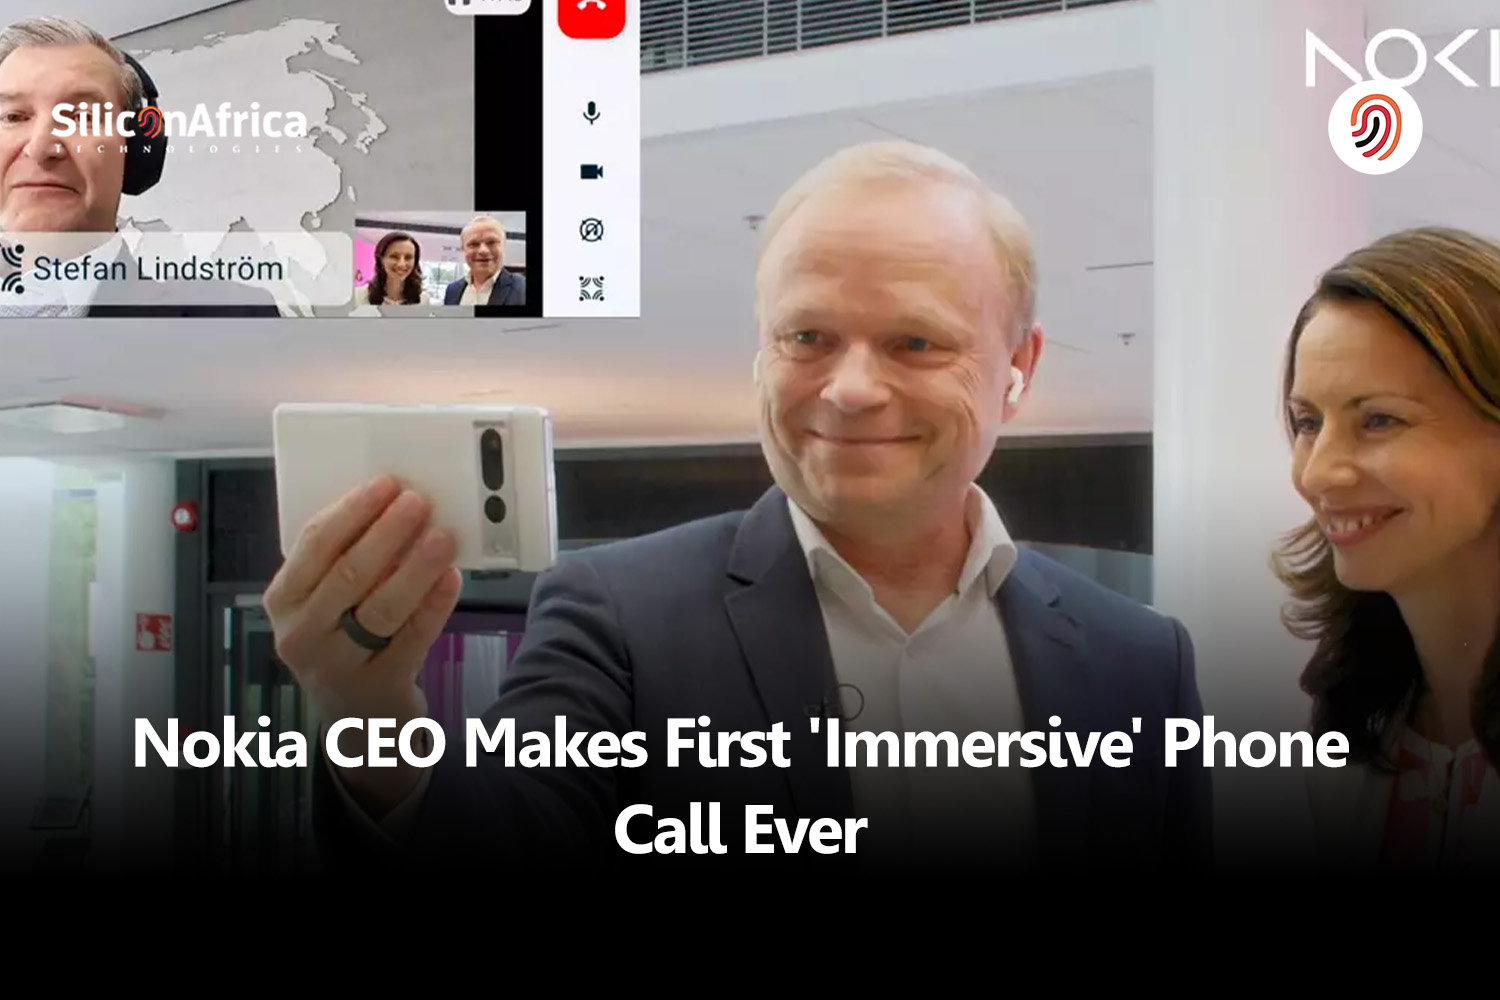 Nokia CEO immersive phone call